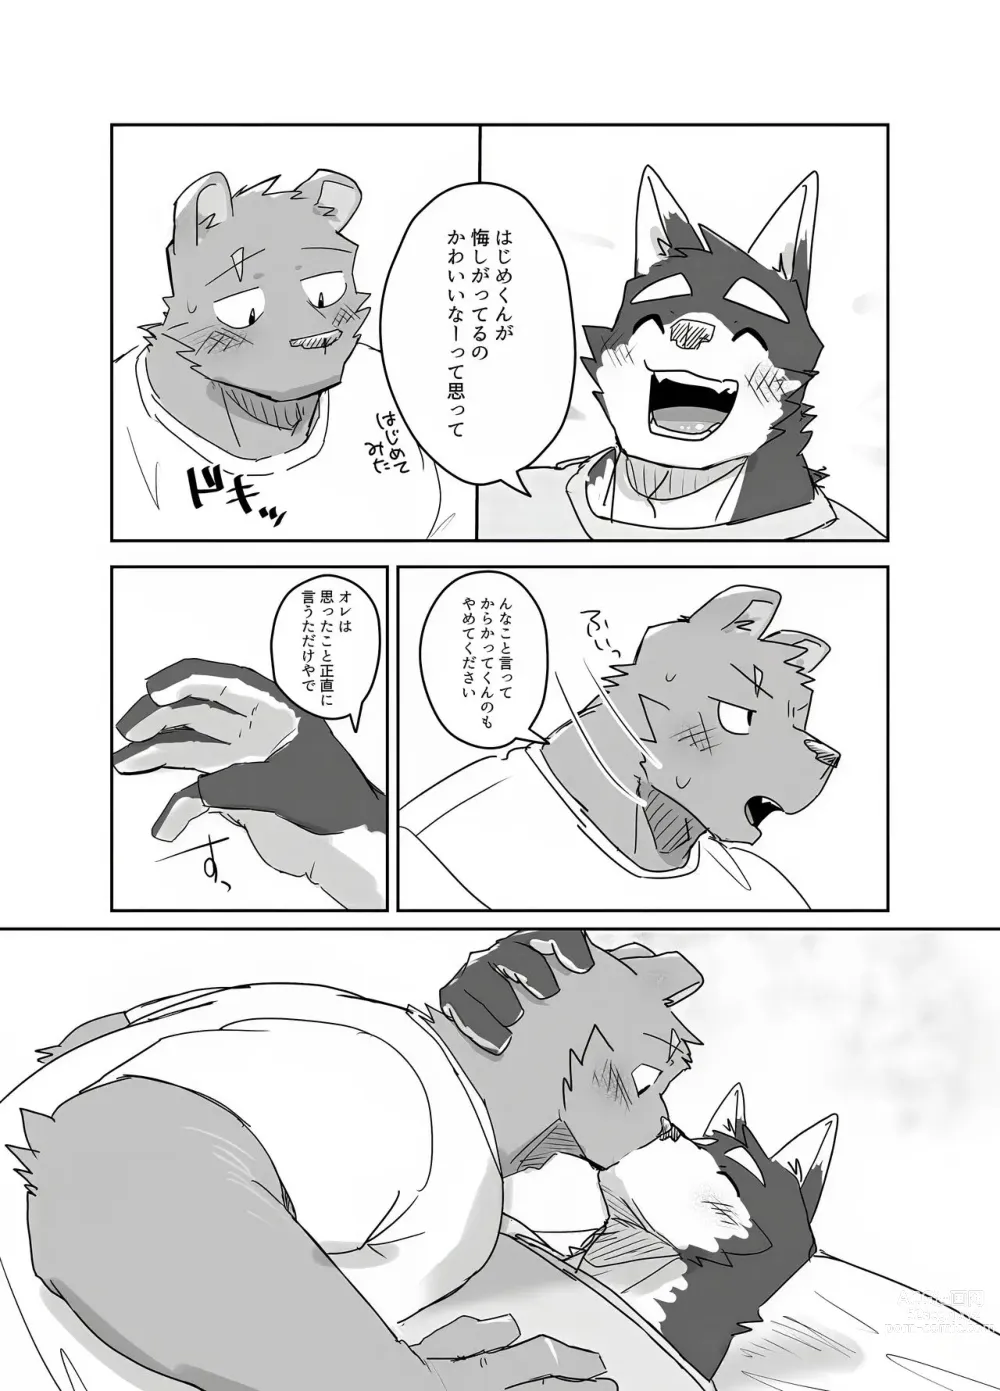 Page 5 of doujinshi 梅雨の日